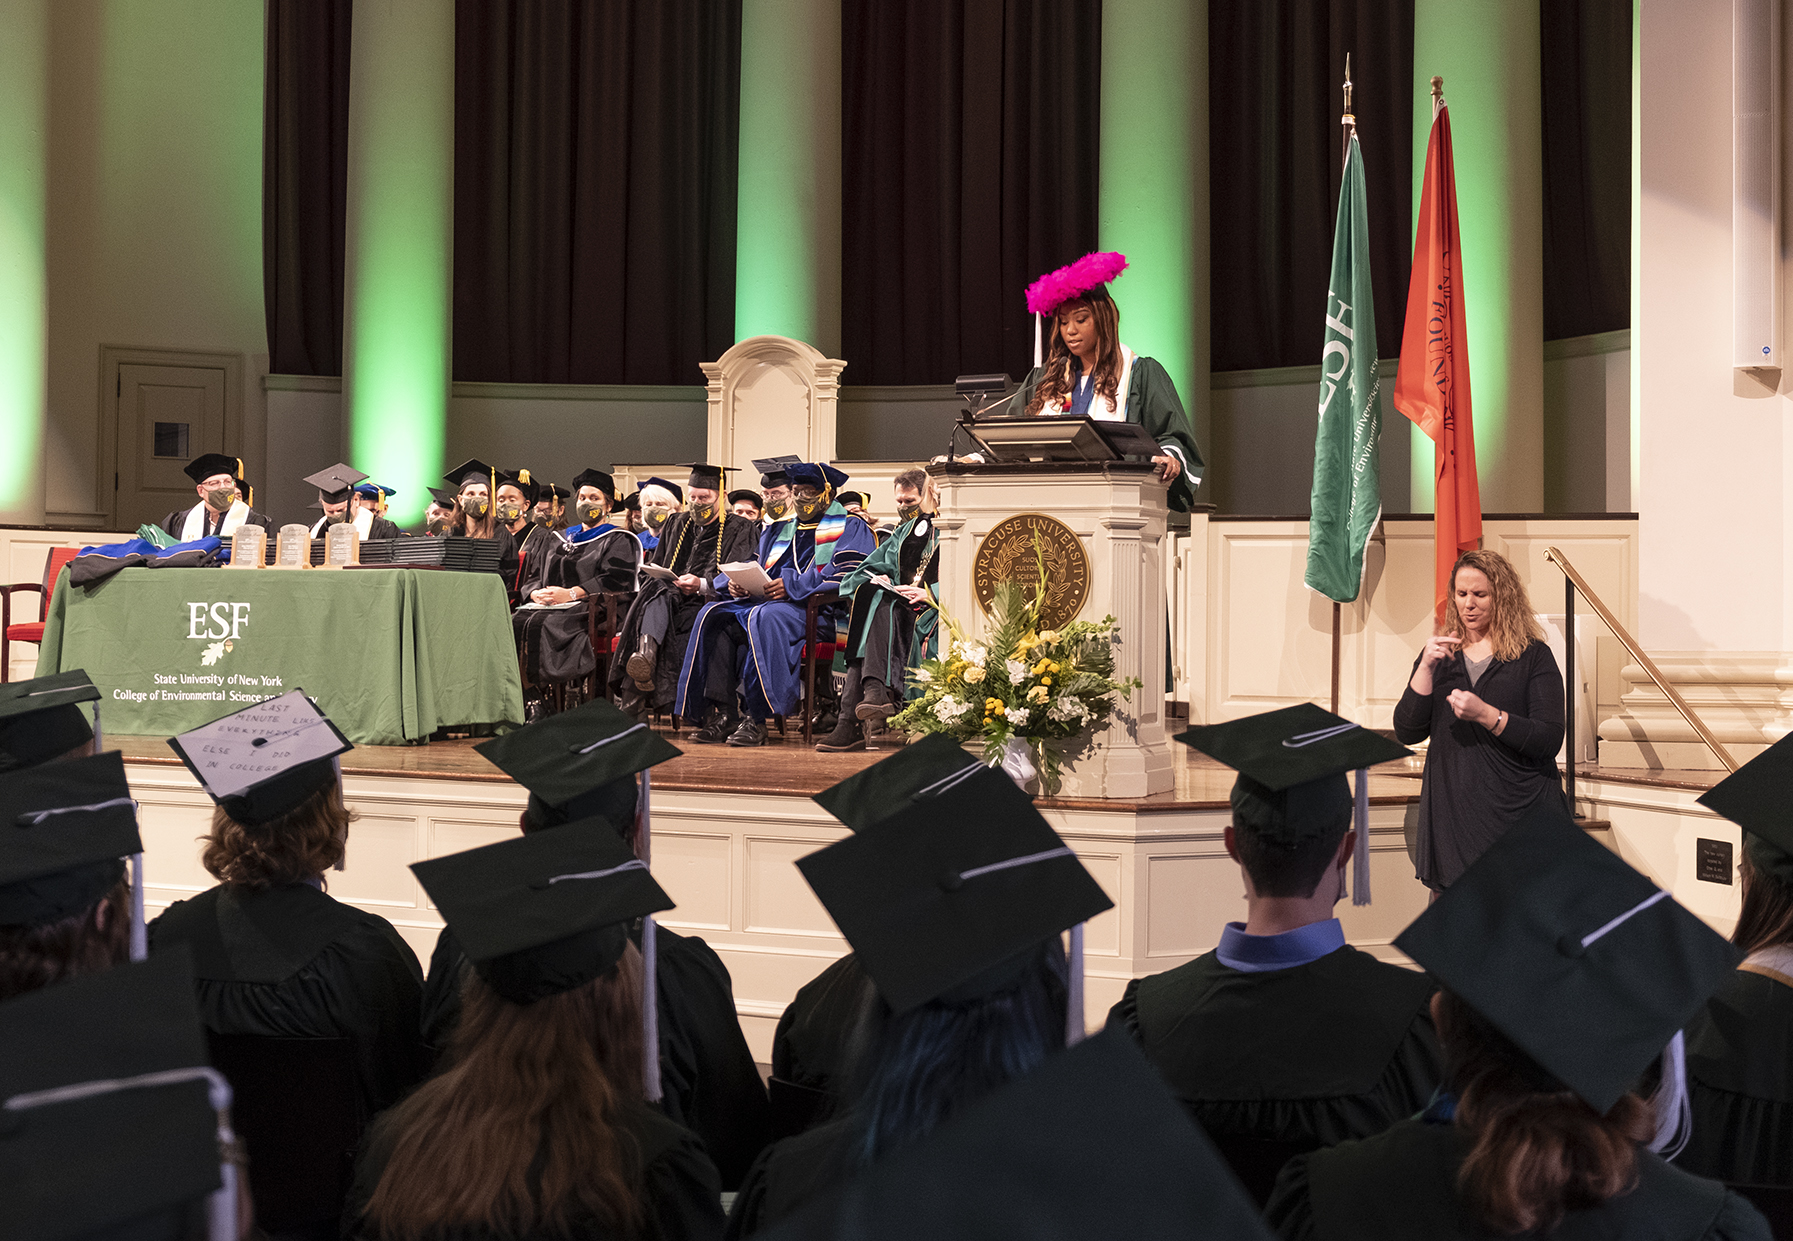 Student at a podium making graduation speech